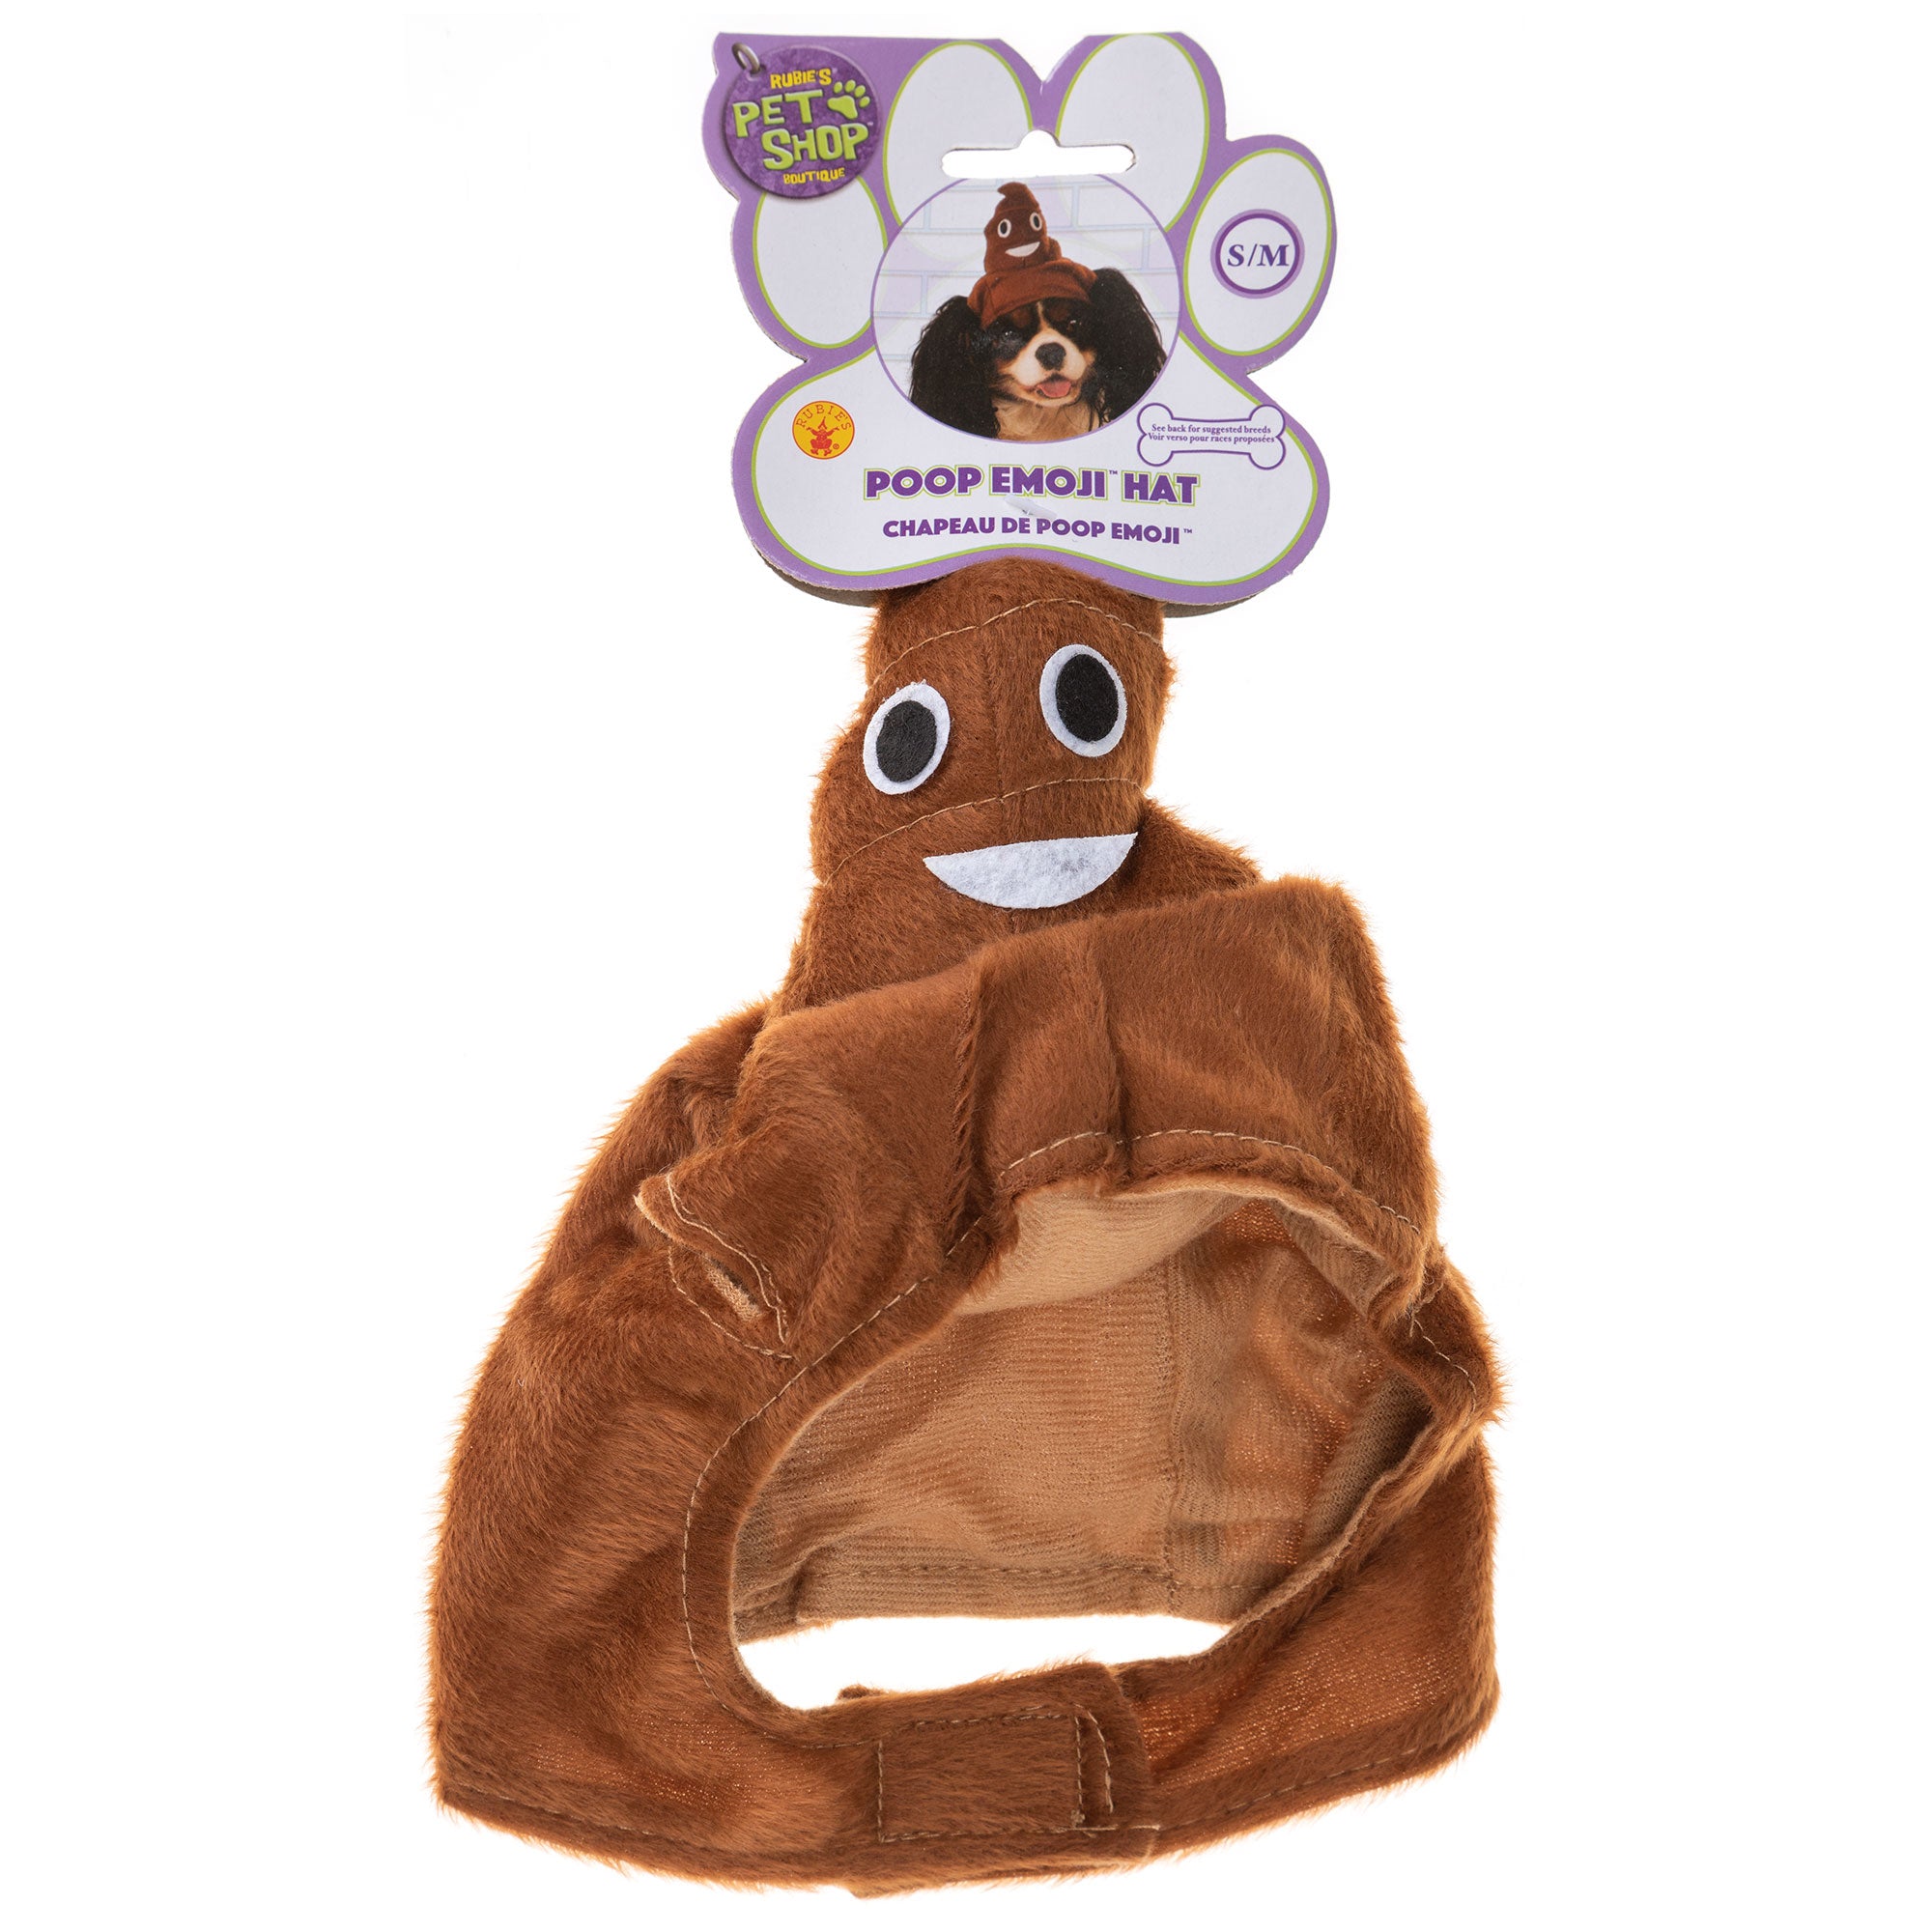 Perfectly Precious Pet Costume - Poop Emoji Hat - M/L